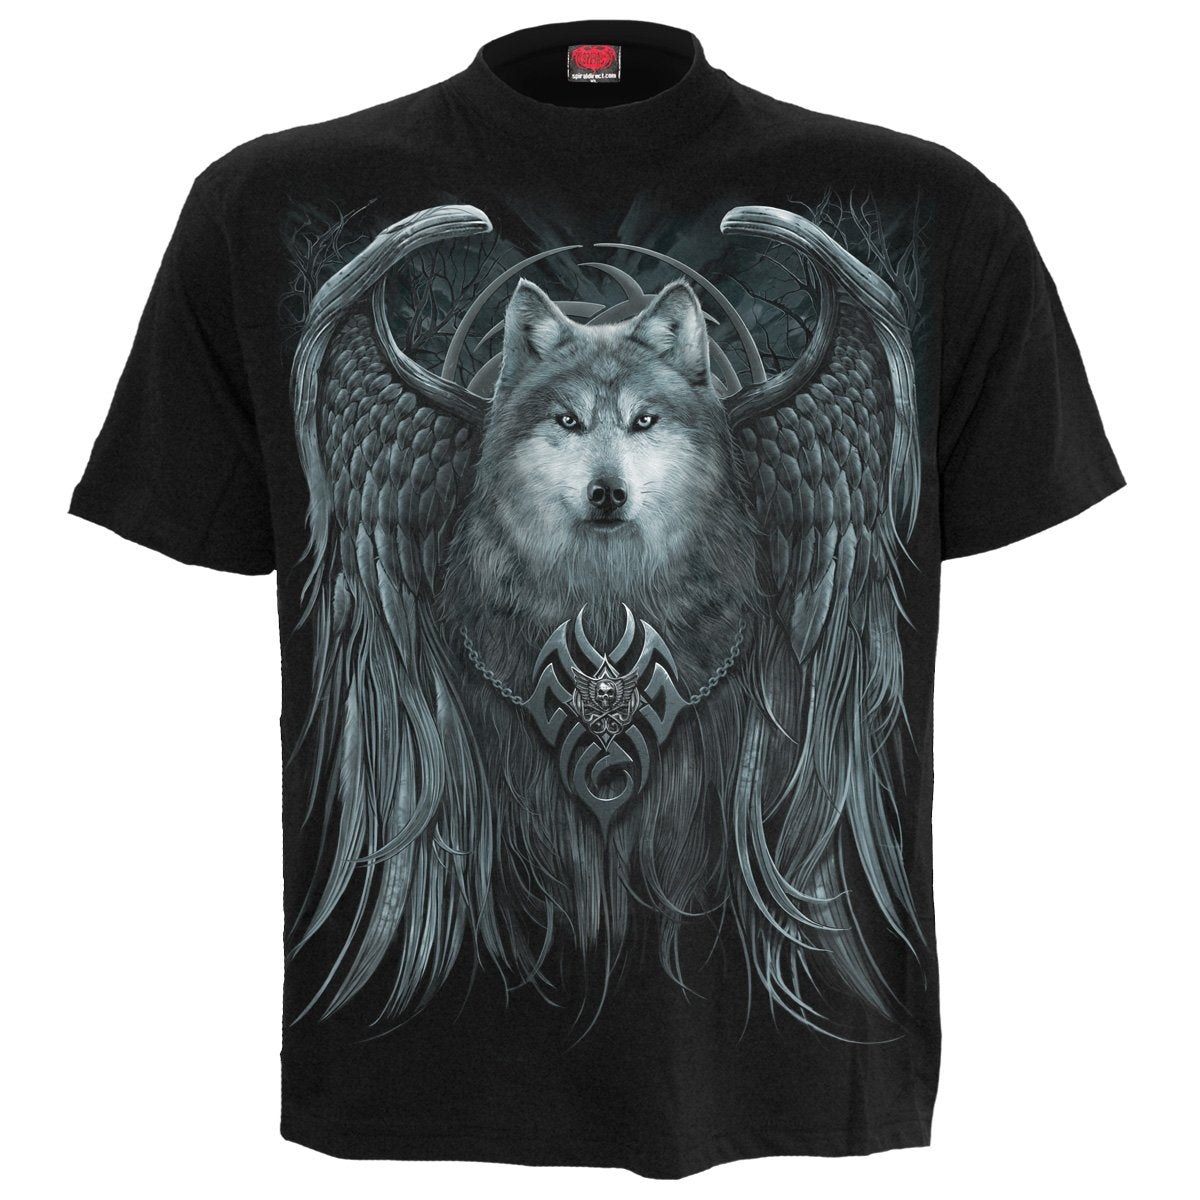 WOLF SPIRIT - T-Shirt Black - Spiral USA